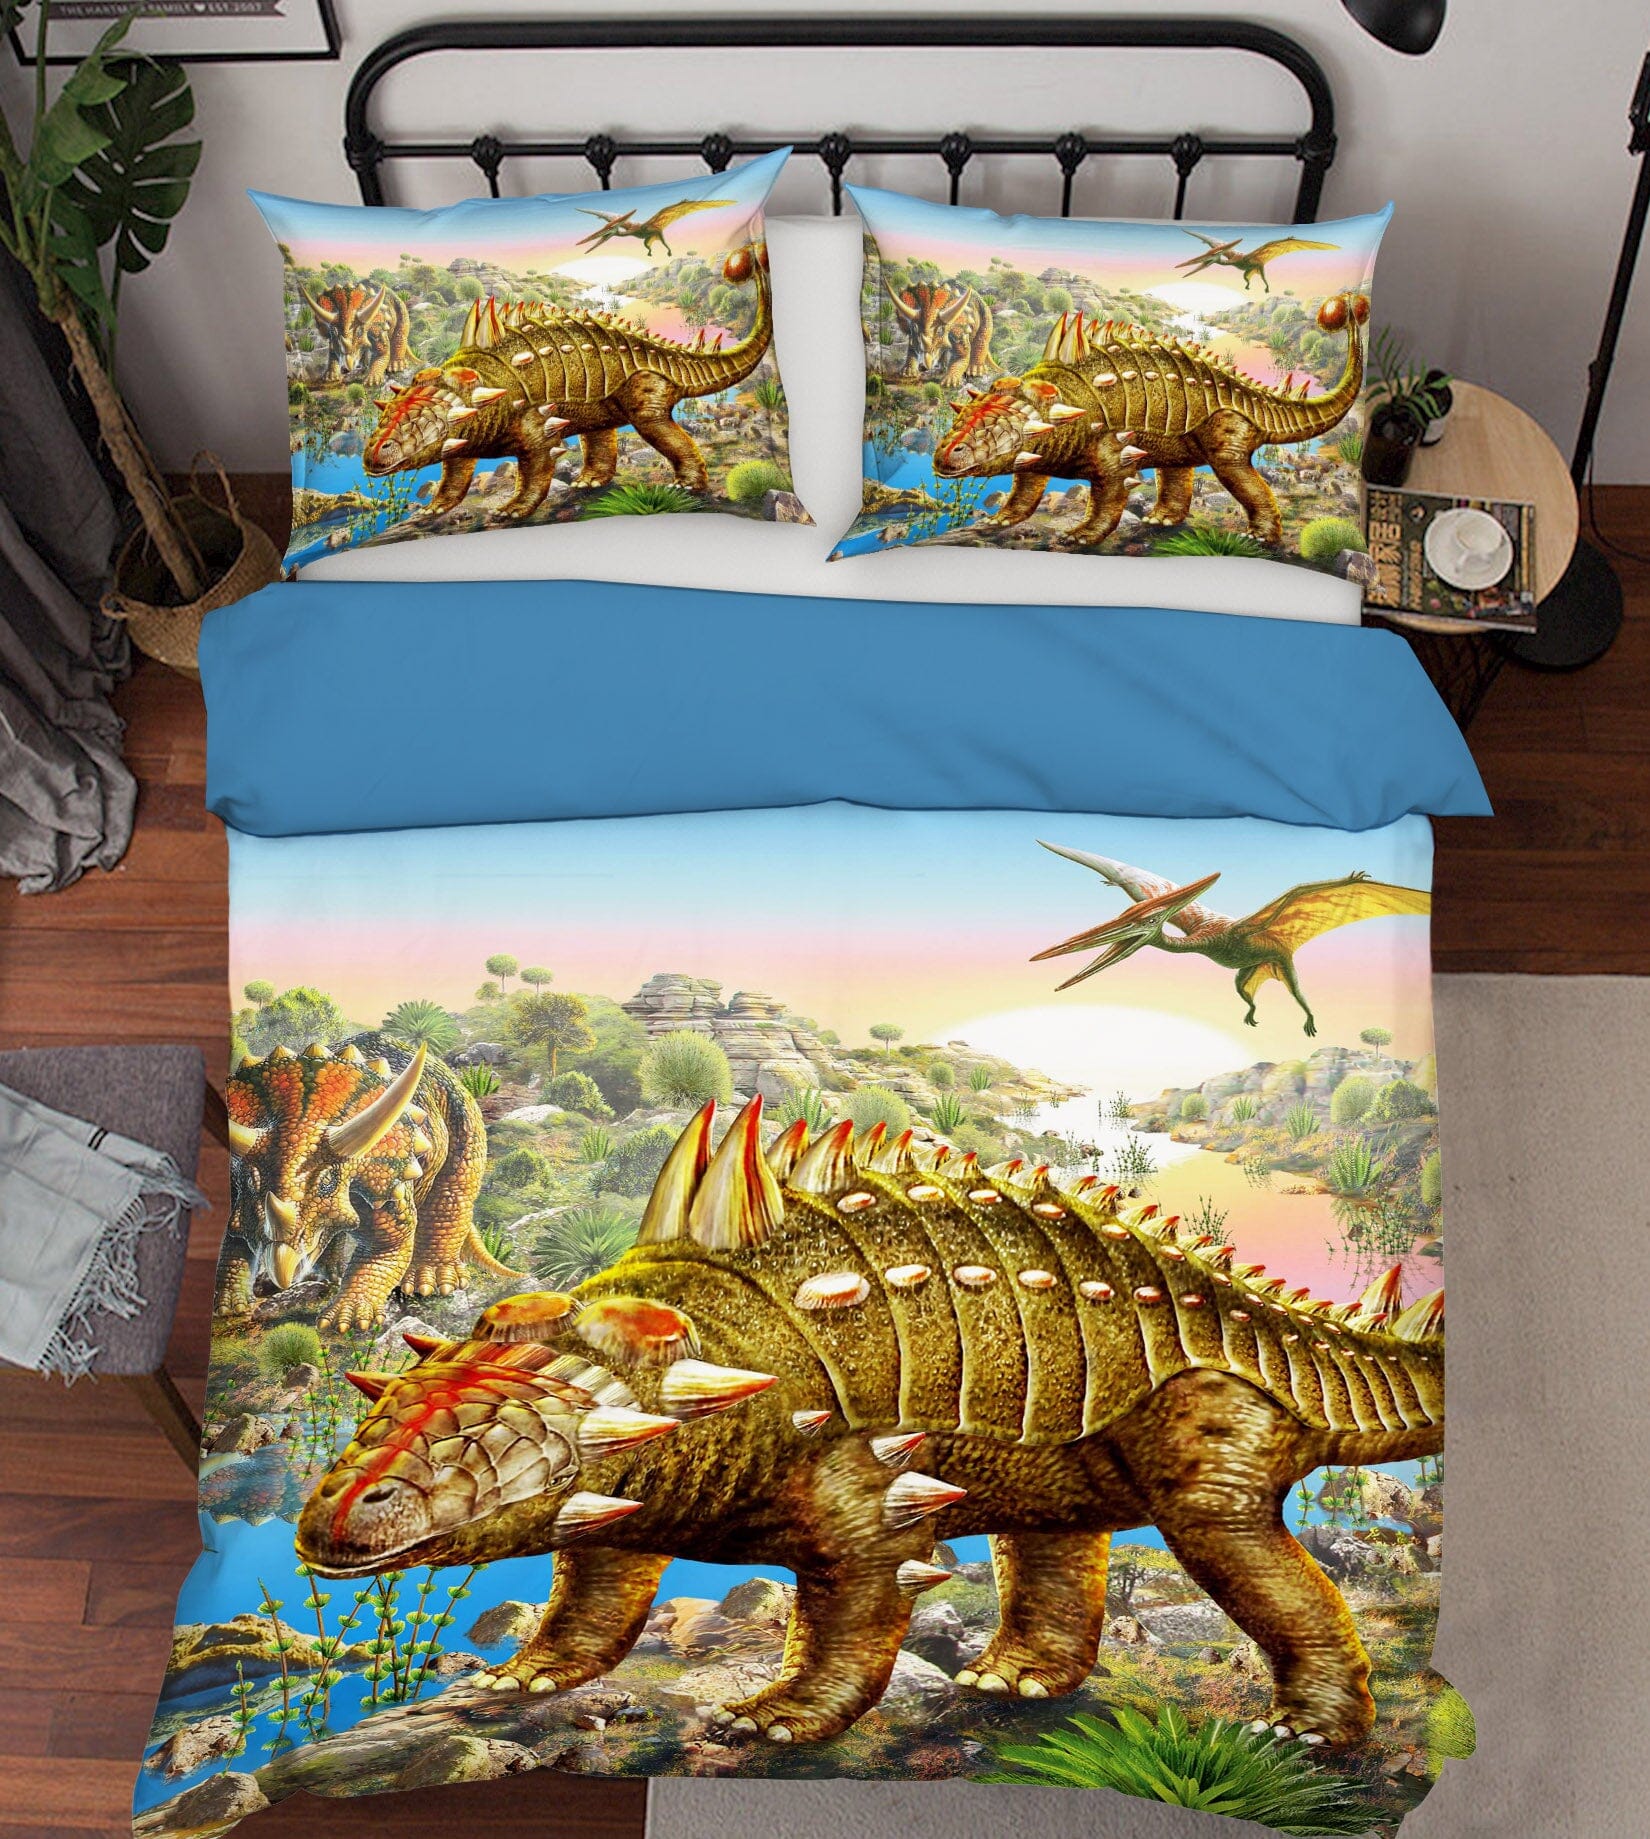 3D Dinosaur World 2102 Adrian Chesterman Bedding Bed Pillowcases Quilt Quiet Covers AJ Creativity Home 